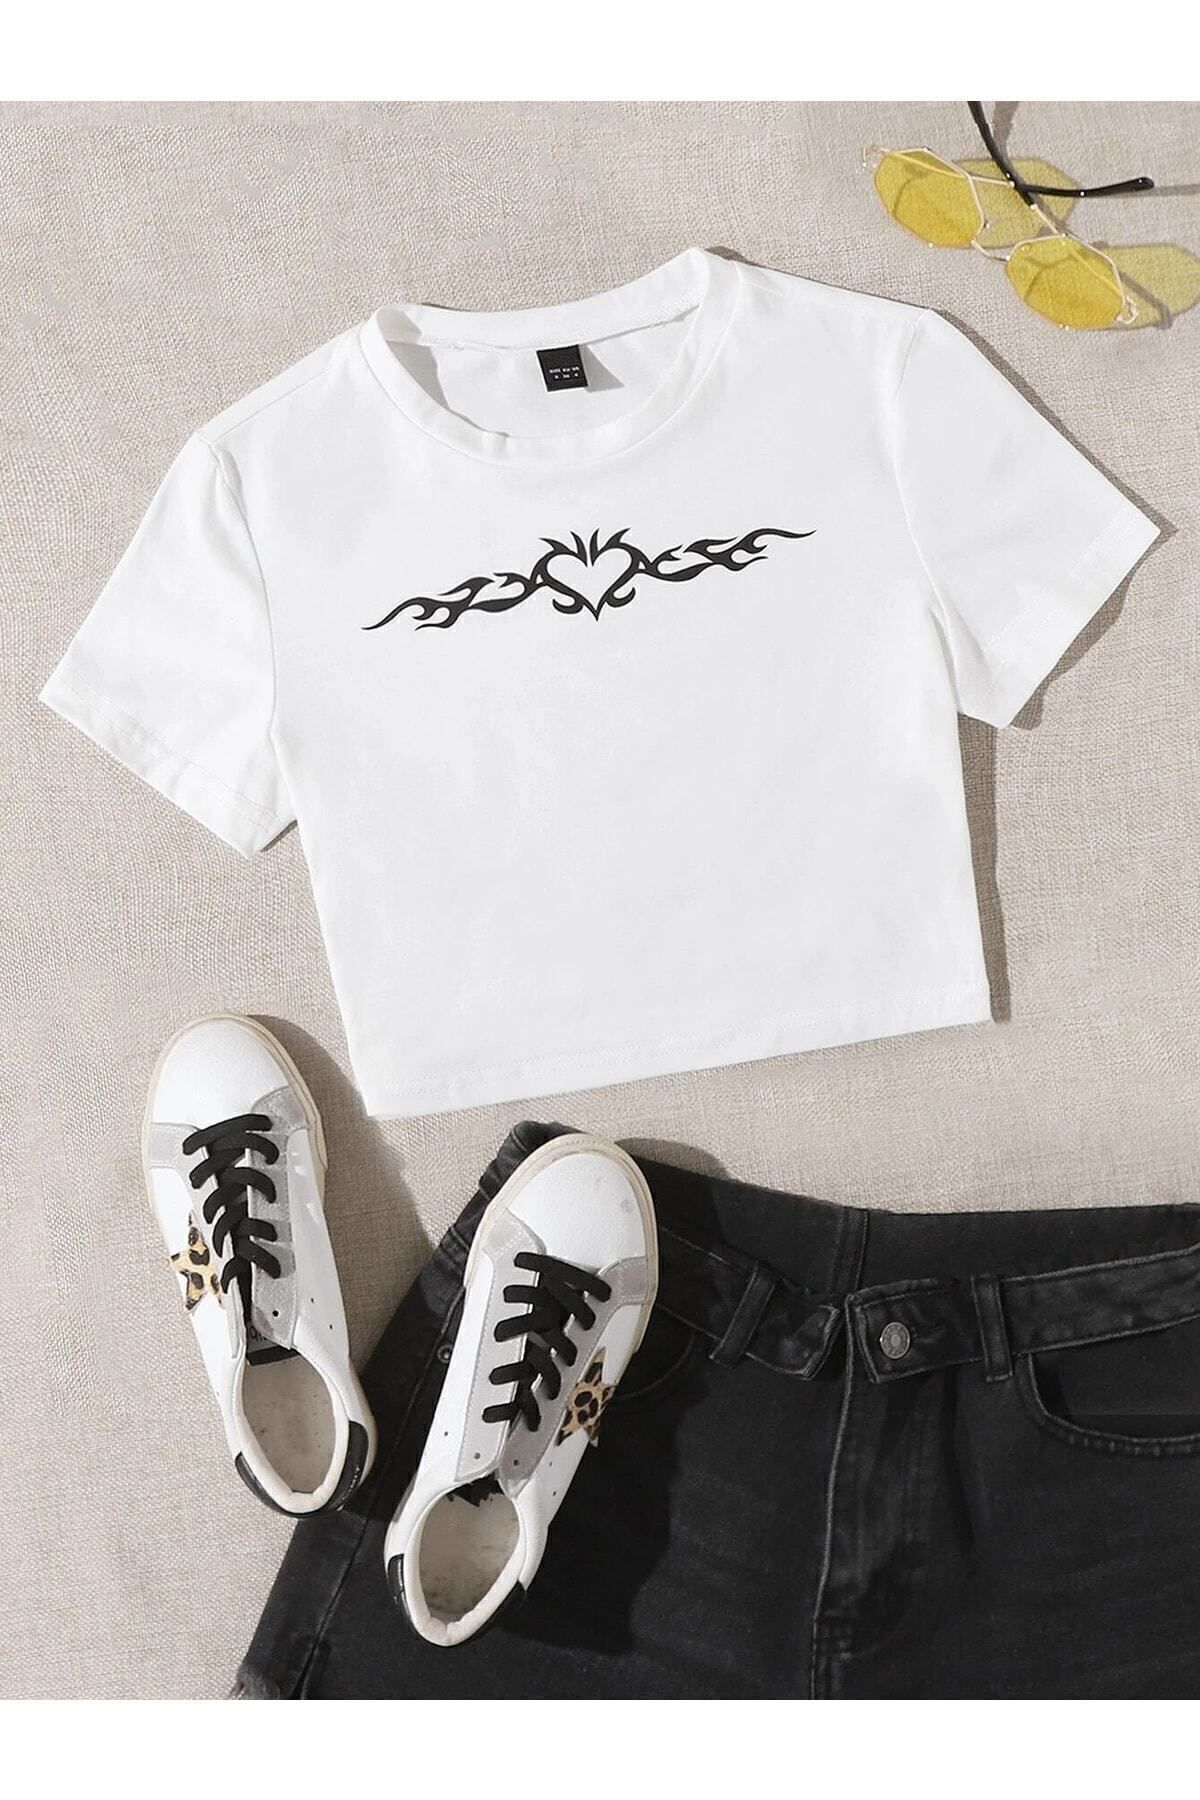 DAXİS Sportwear Company Baskılı Crop Tshirt